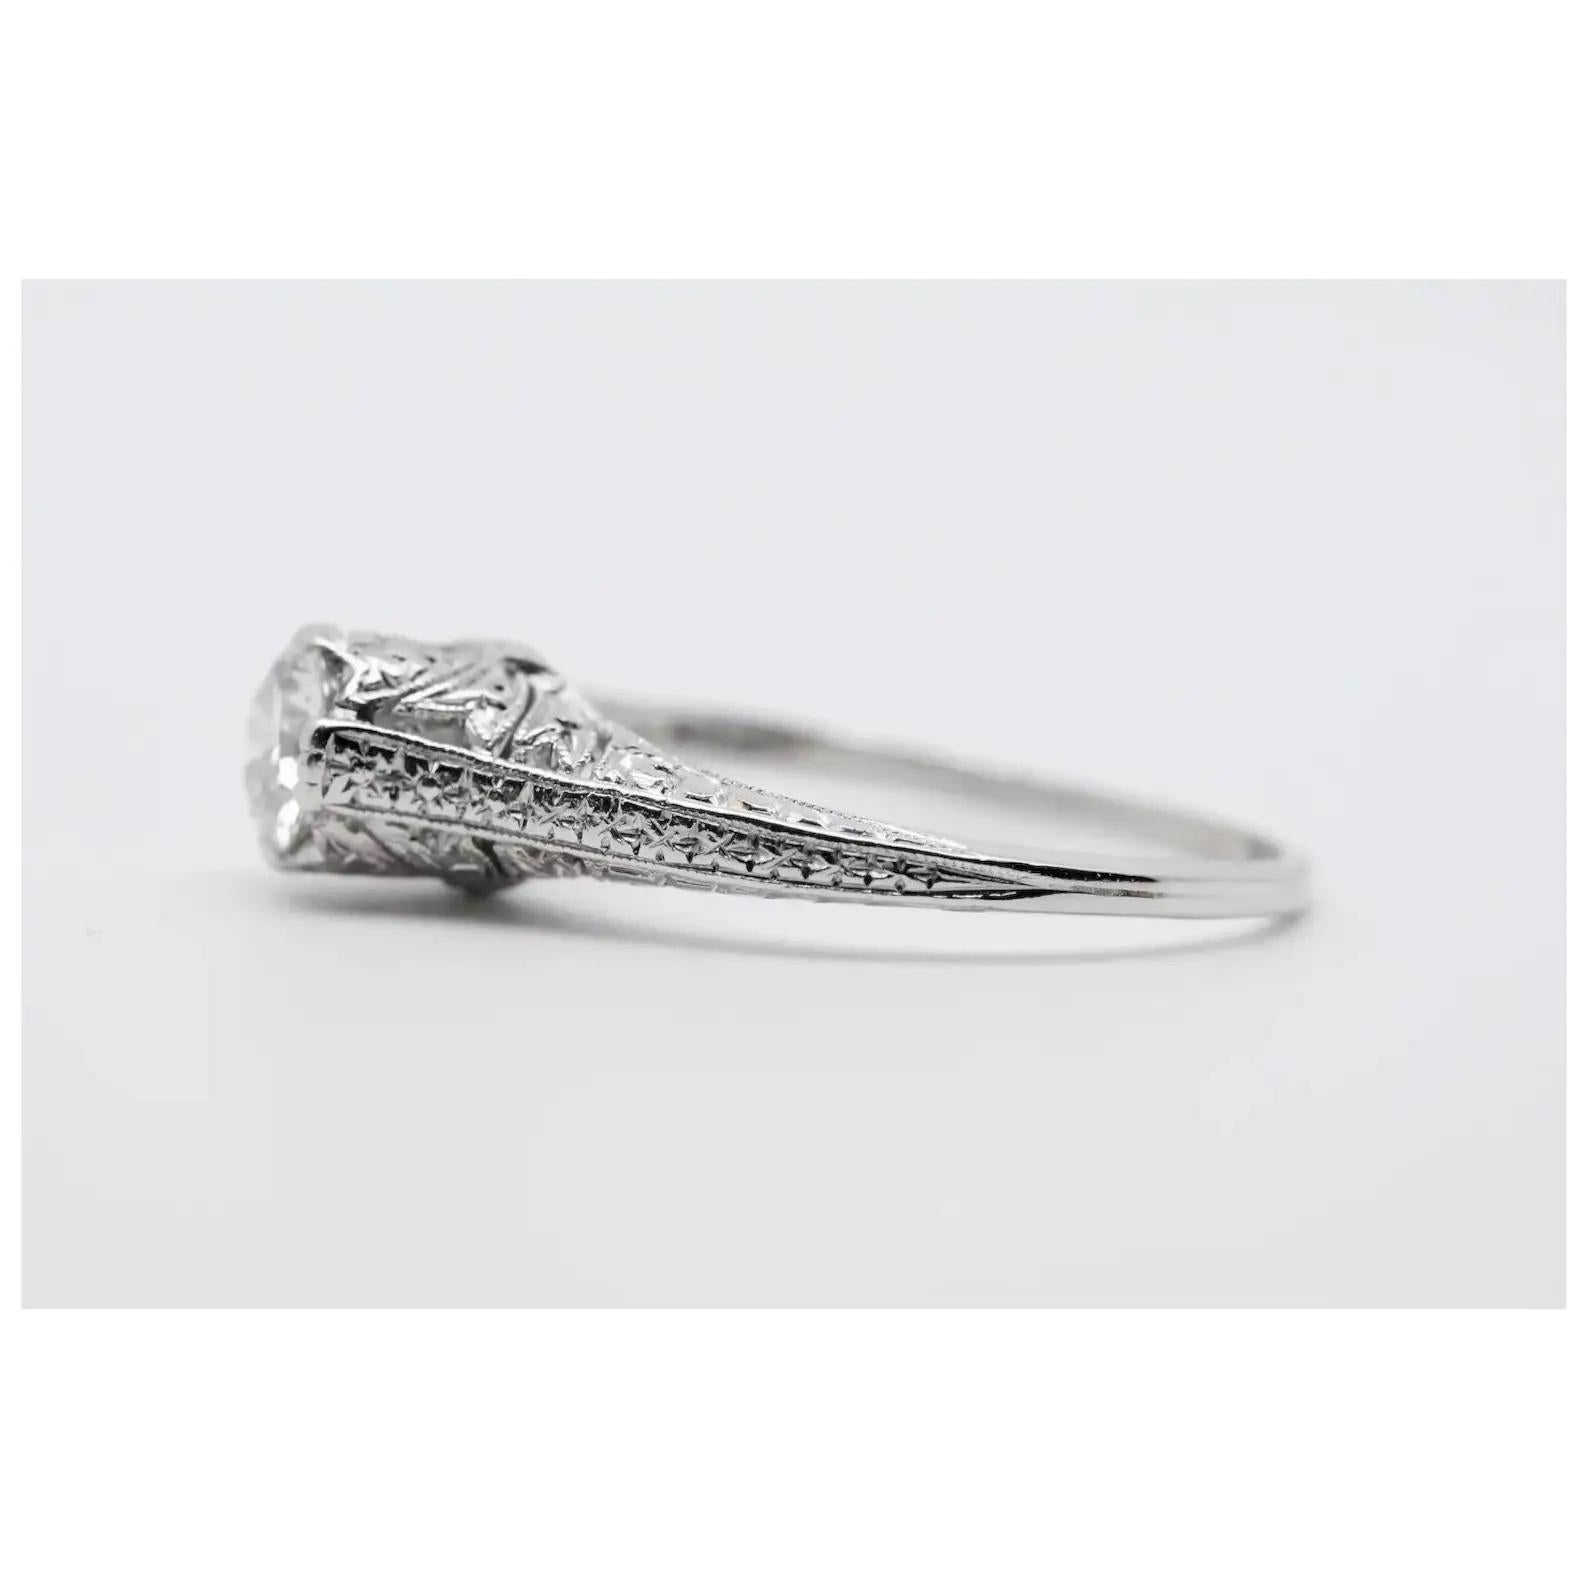 Old European Cut Hand Engraved Art Deco 0.60 Carat Diamond Solitare Engagement Ring in Platinum For Sale